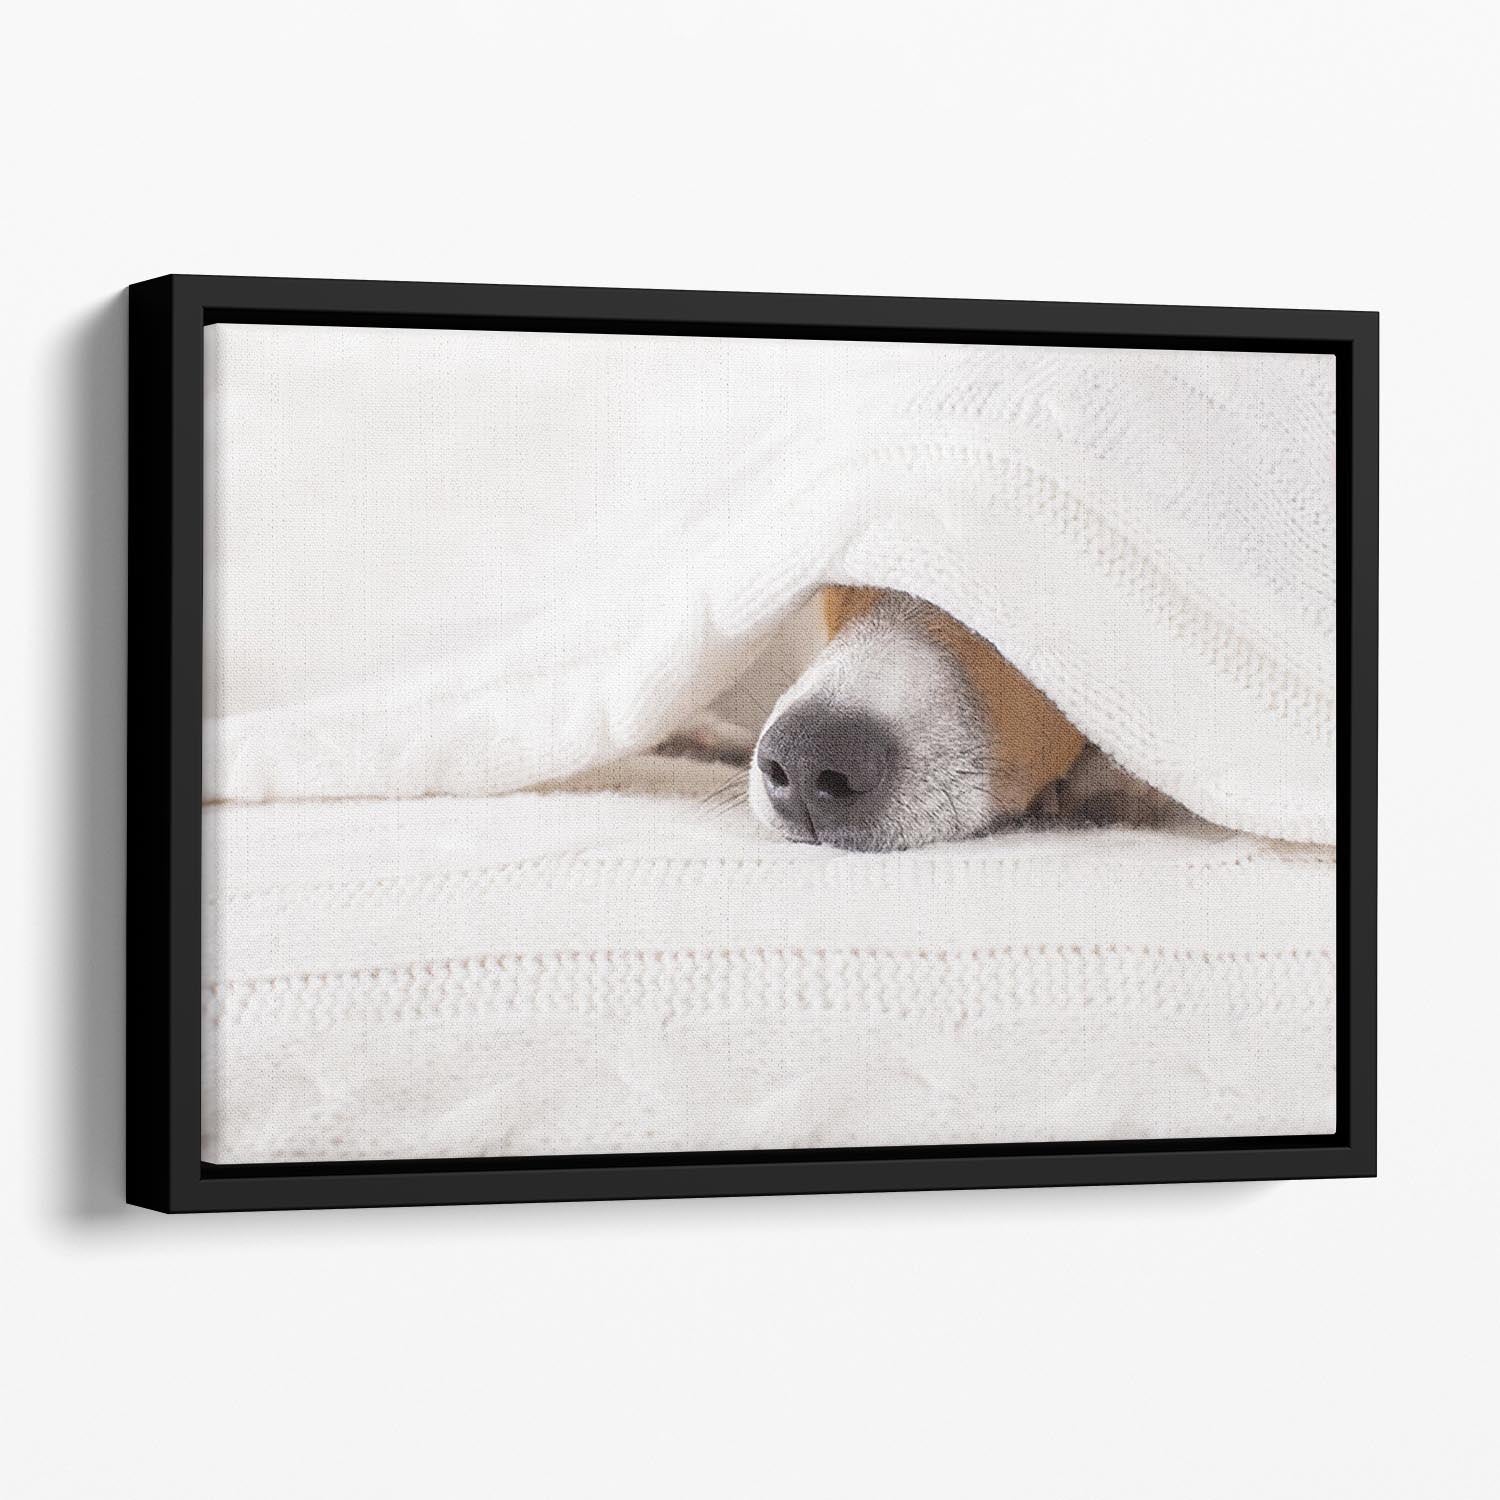 Jack russell dog sleeping under the blanket Floating Framed Canvas - Canvas Art Rocks - 1